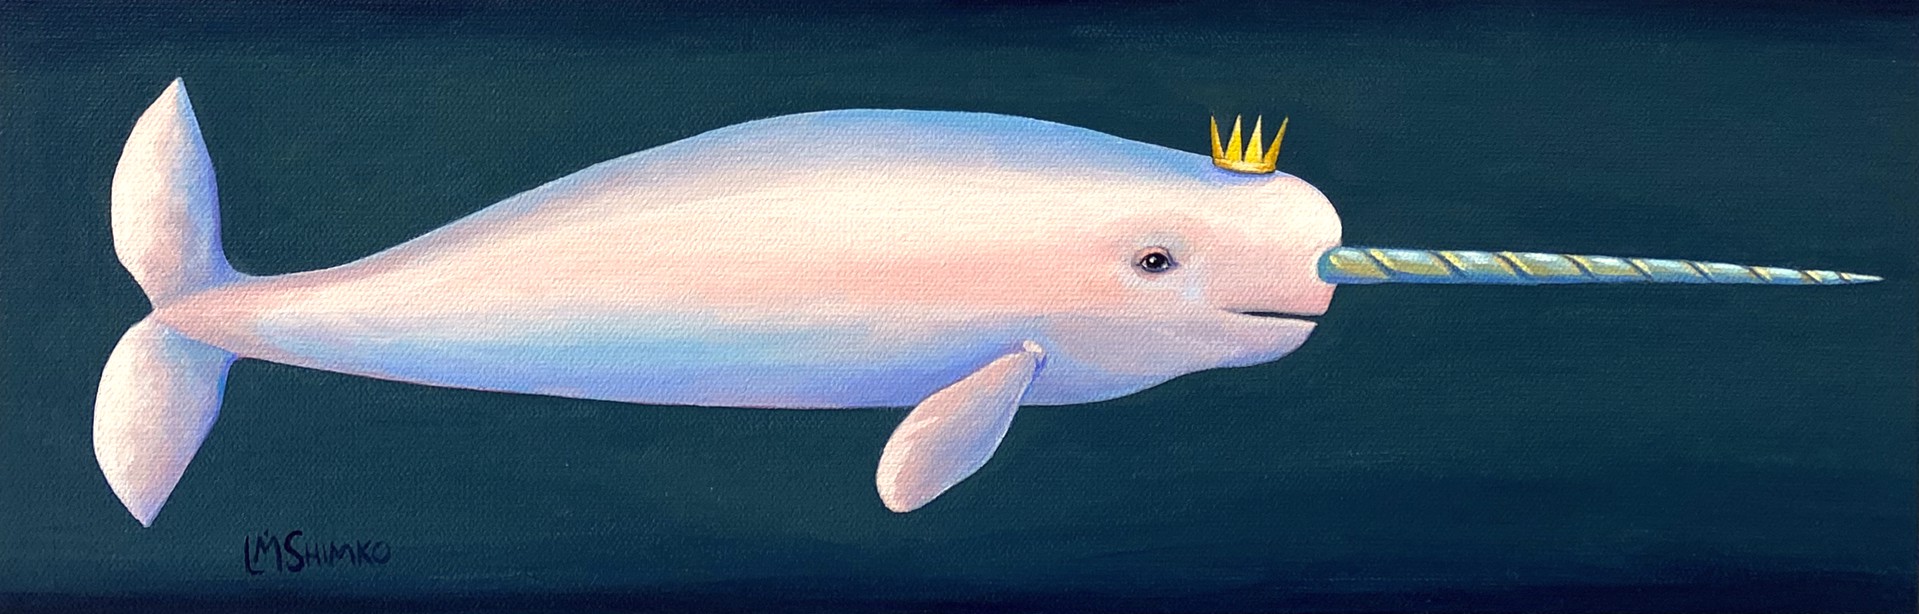 Royal Ocean Unicorn 2 by Lisa Shimko